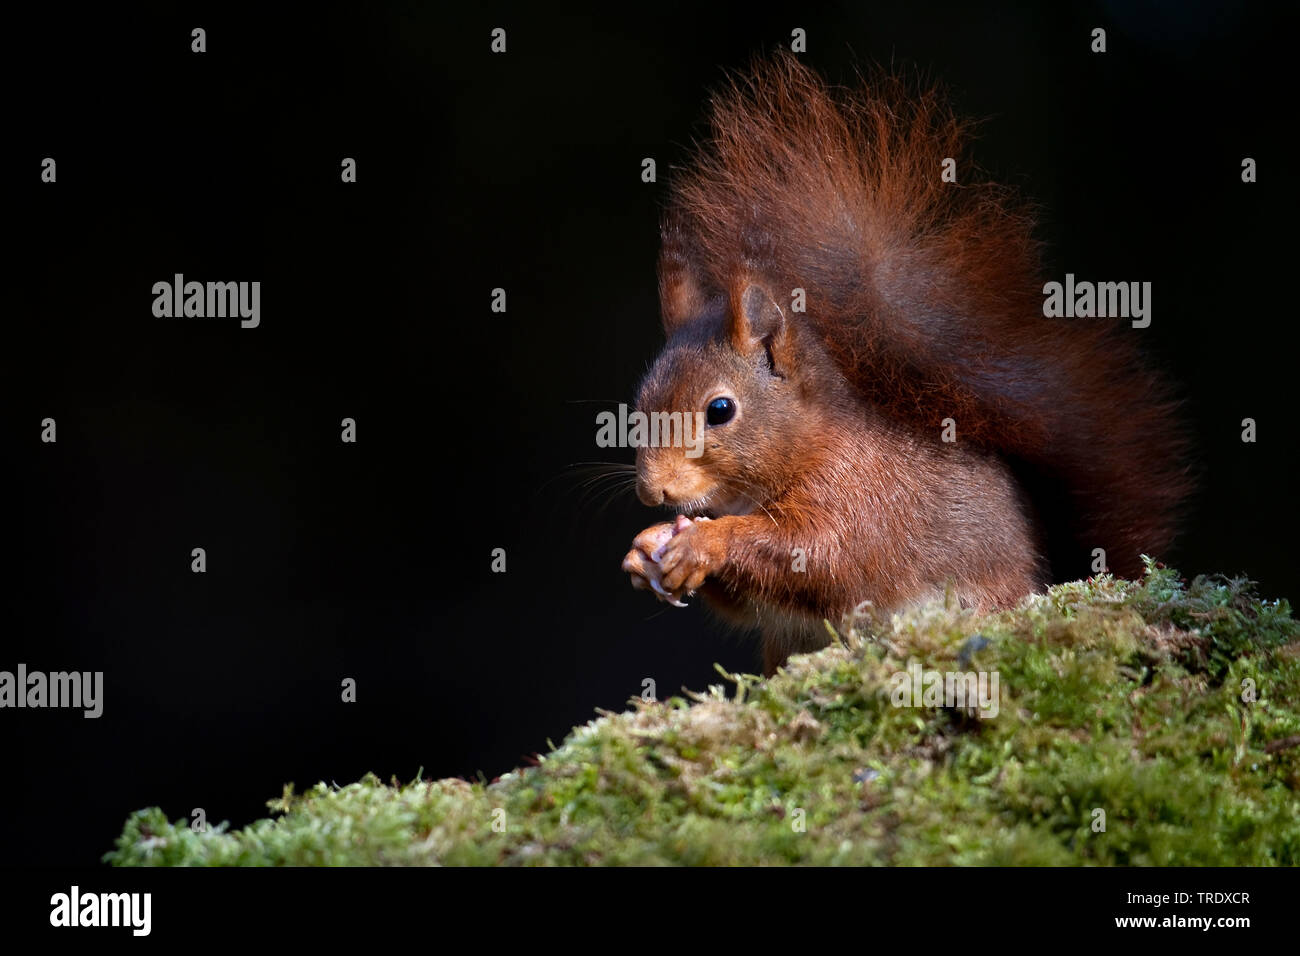 European red squirrel, Eurasian red squirrel (Sciurus vulgaris), on a tree stump, Netherlands, Overijssel Stock Photo